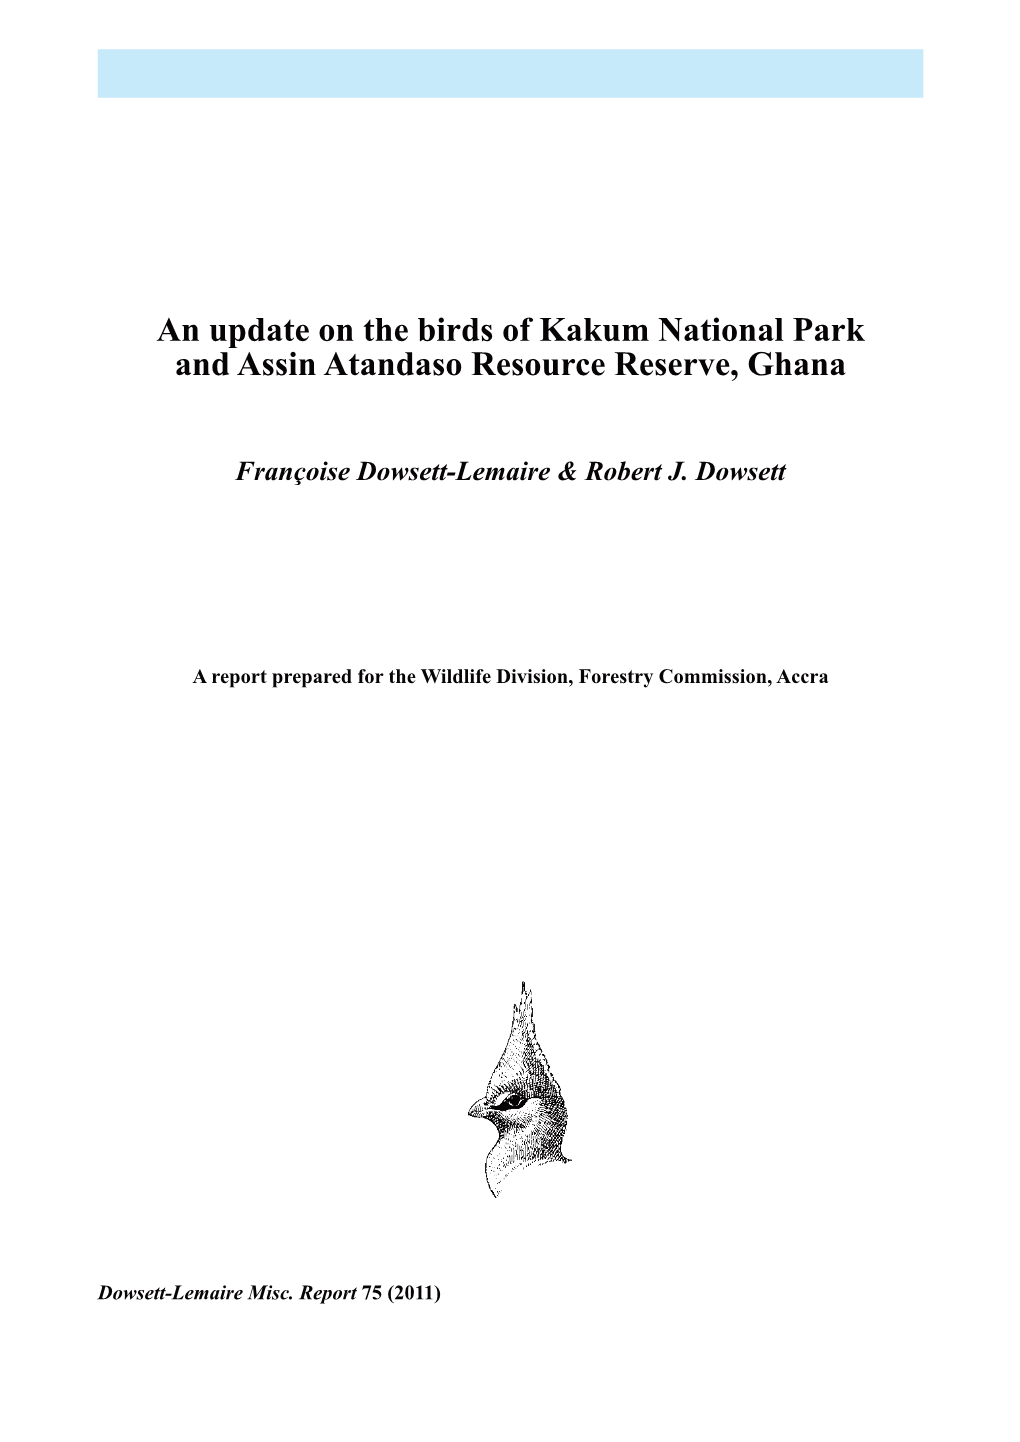 An Update on the Birds of Kakum National Park and Assin Atandaso Resource Reserve, Ghana